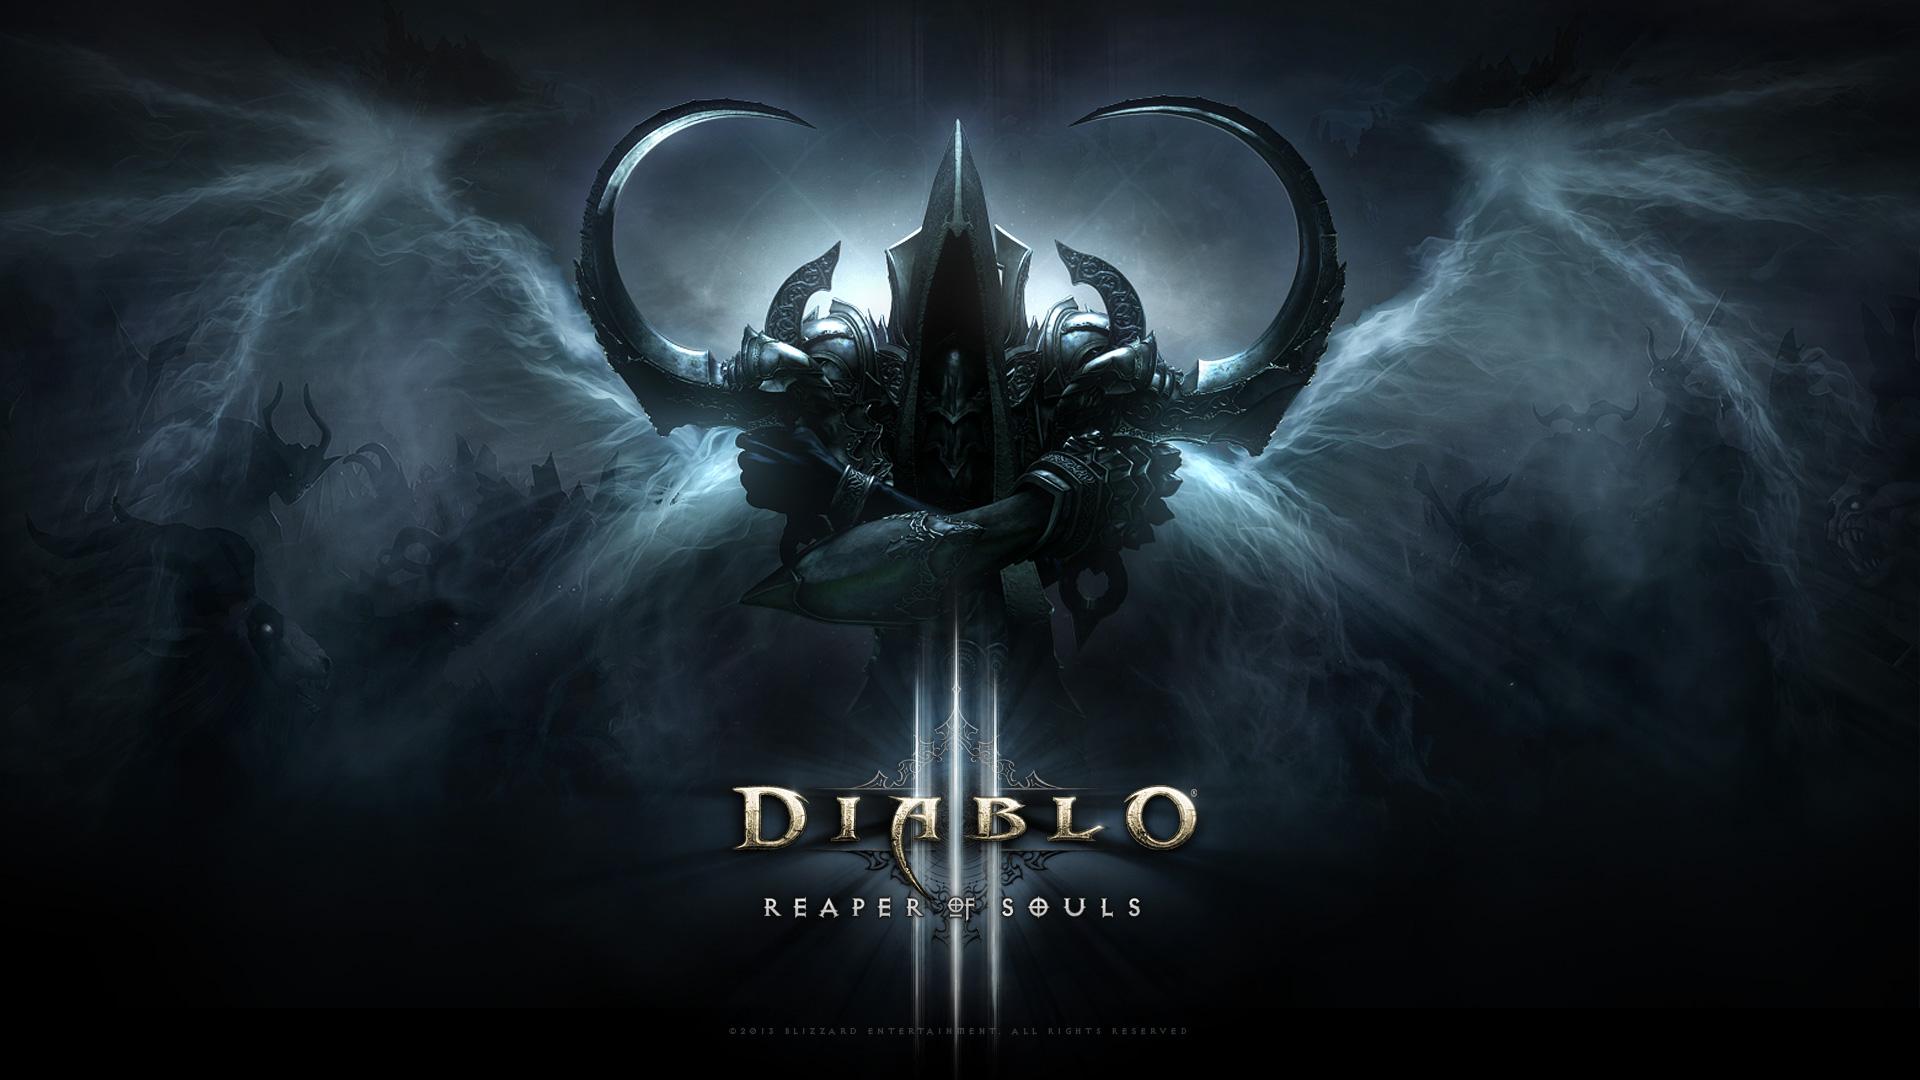 Diablo 3 version for PC